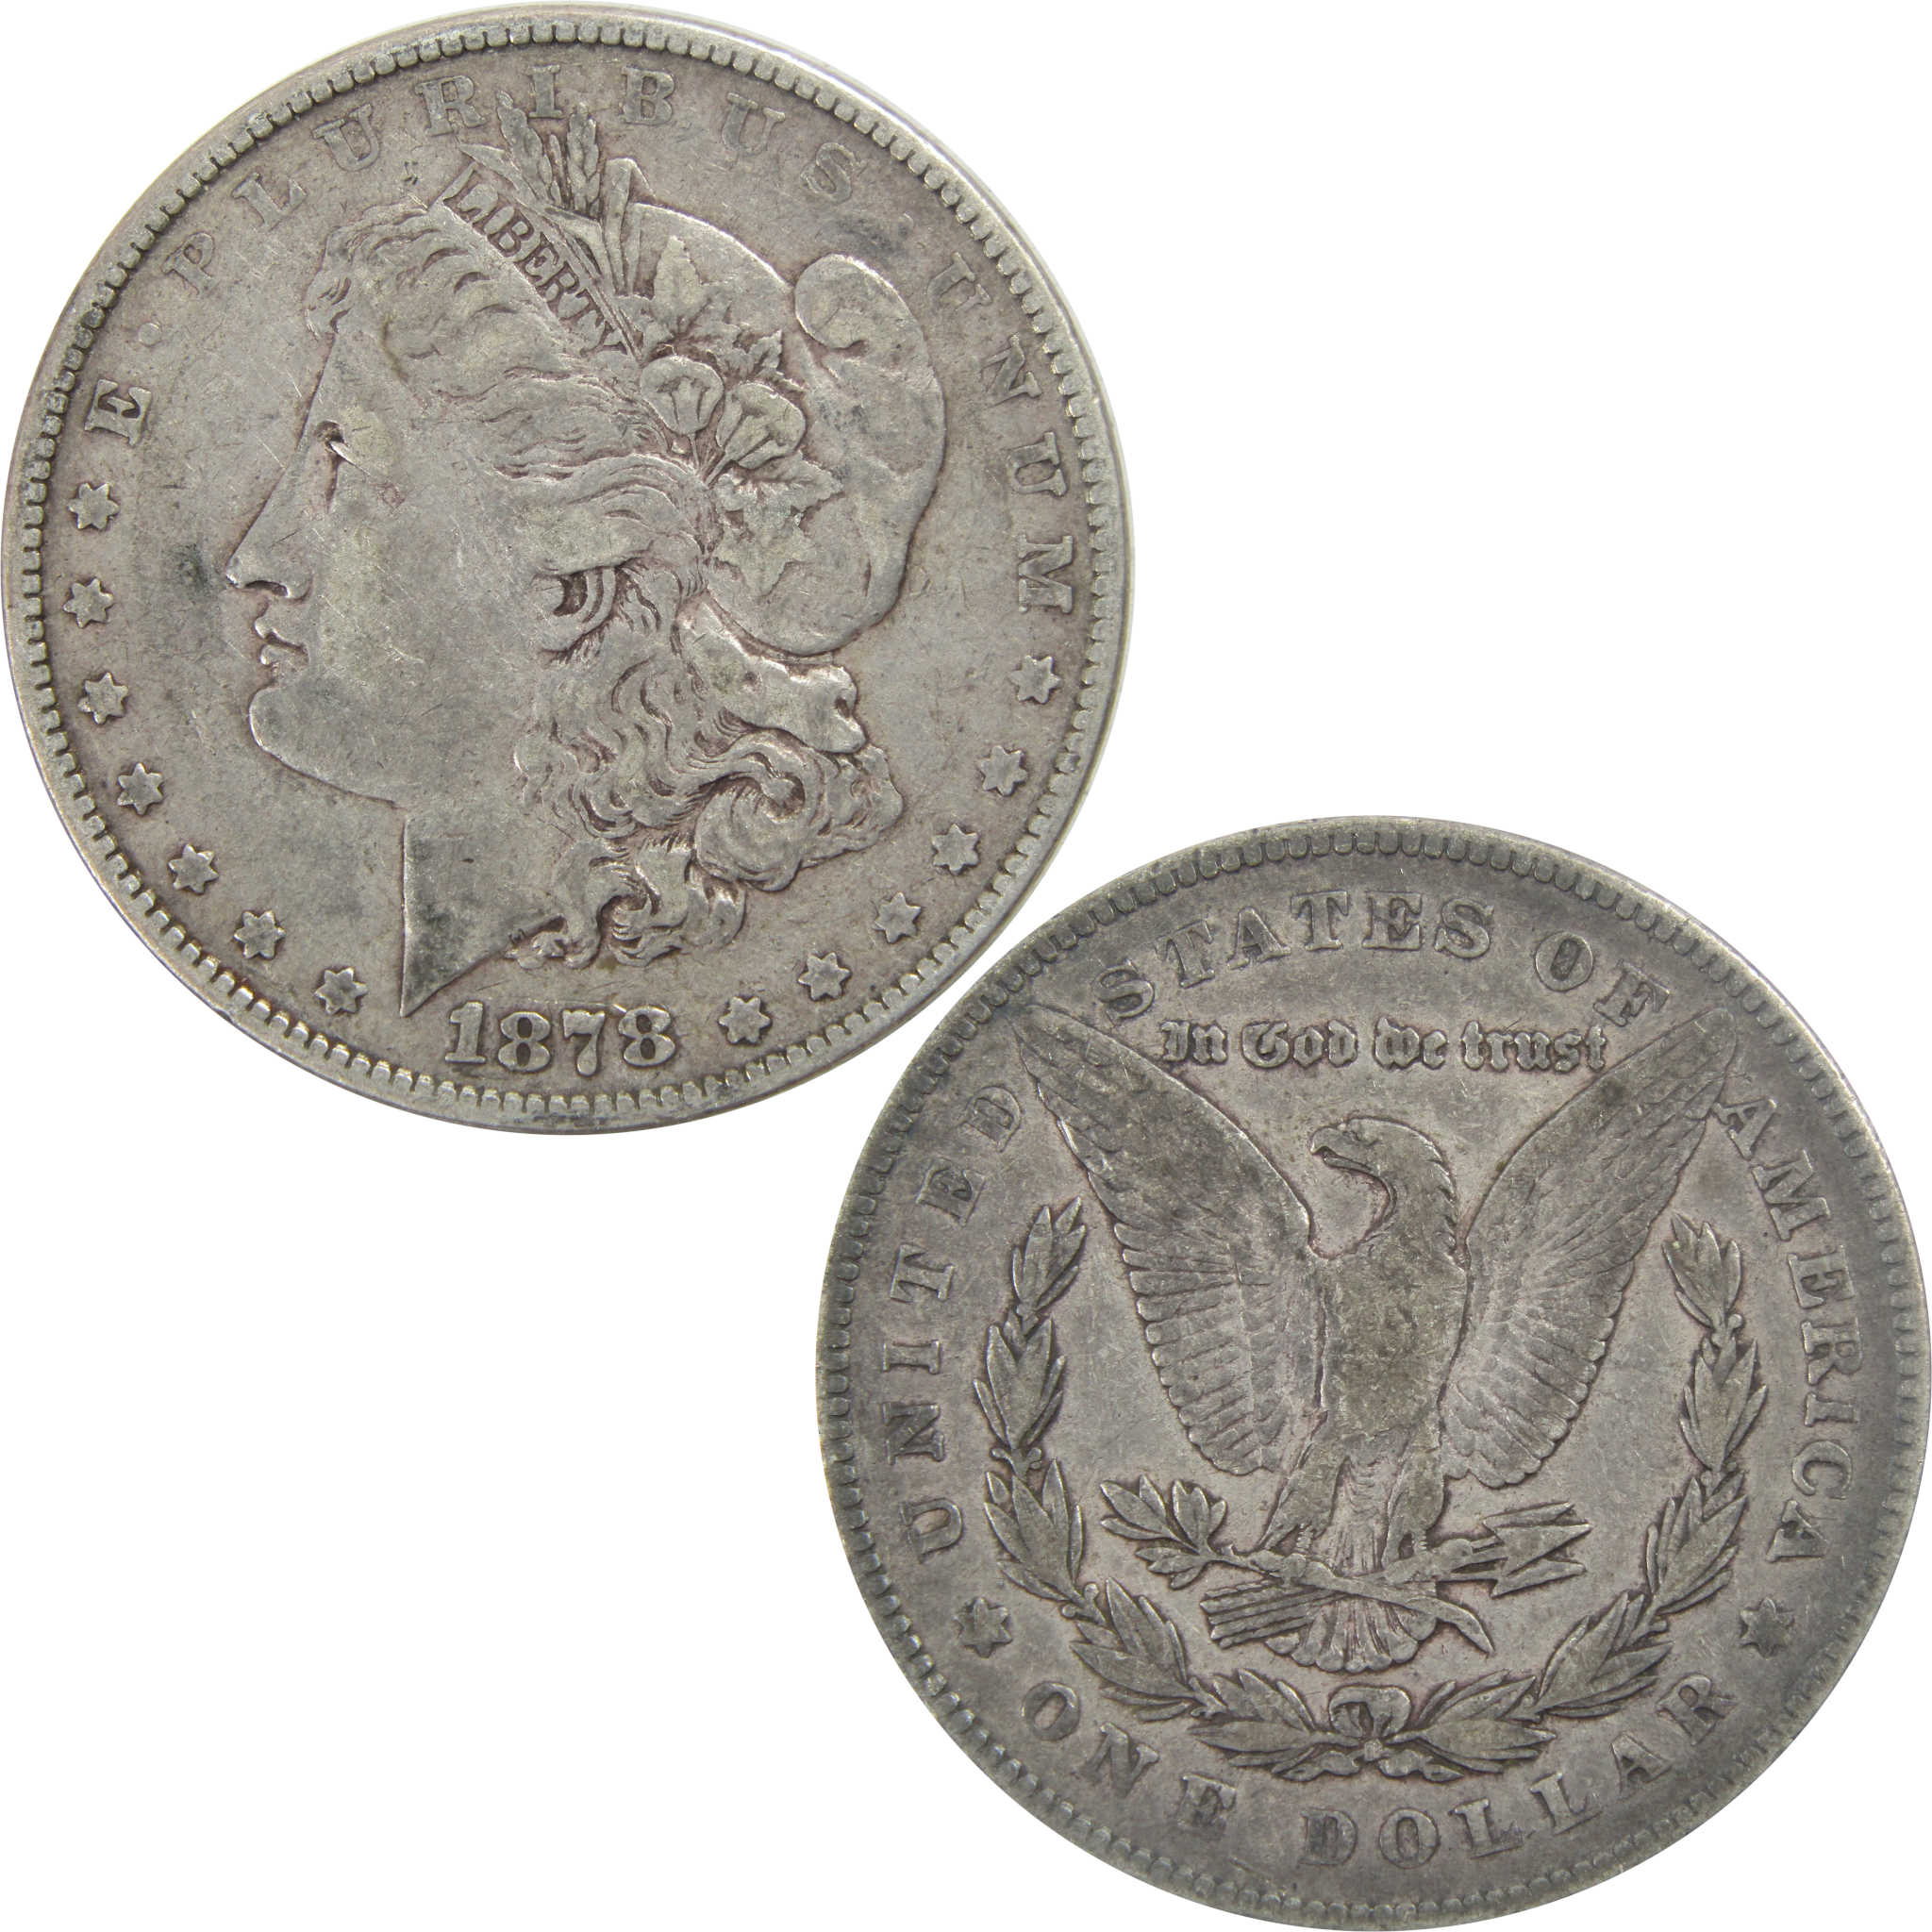 1878 7TF Rev 78 Morgan Dollar F Fine 90% Silver $1 Coin SKU:I5547 - Morgan coin - Morgan silver dollar - Morgan silver dollar for sale - Profile Coins &amp; Collectibles